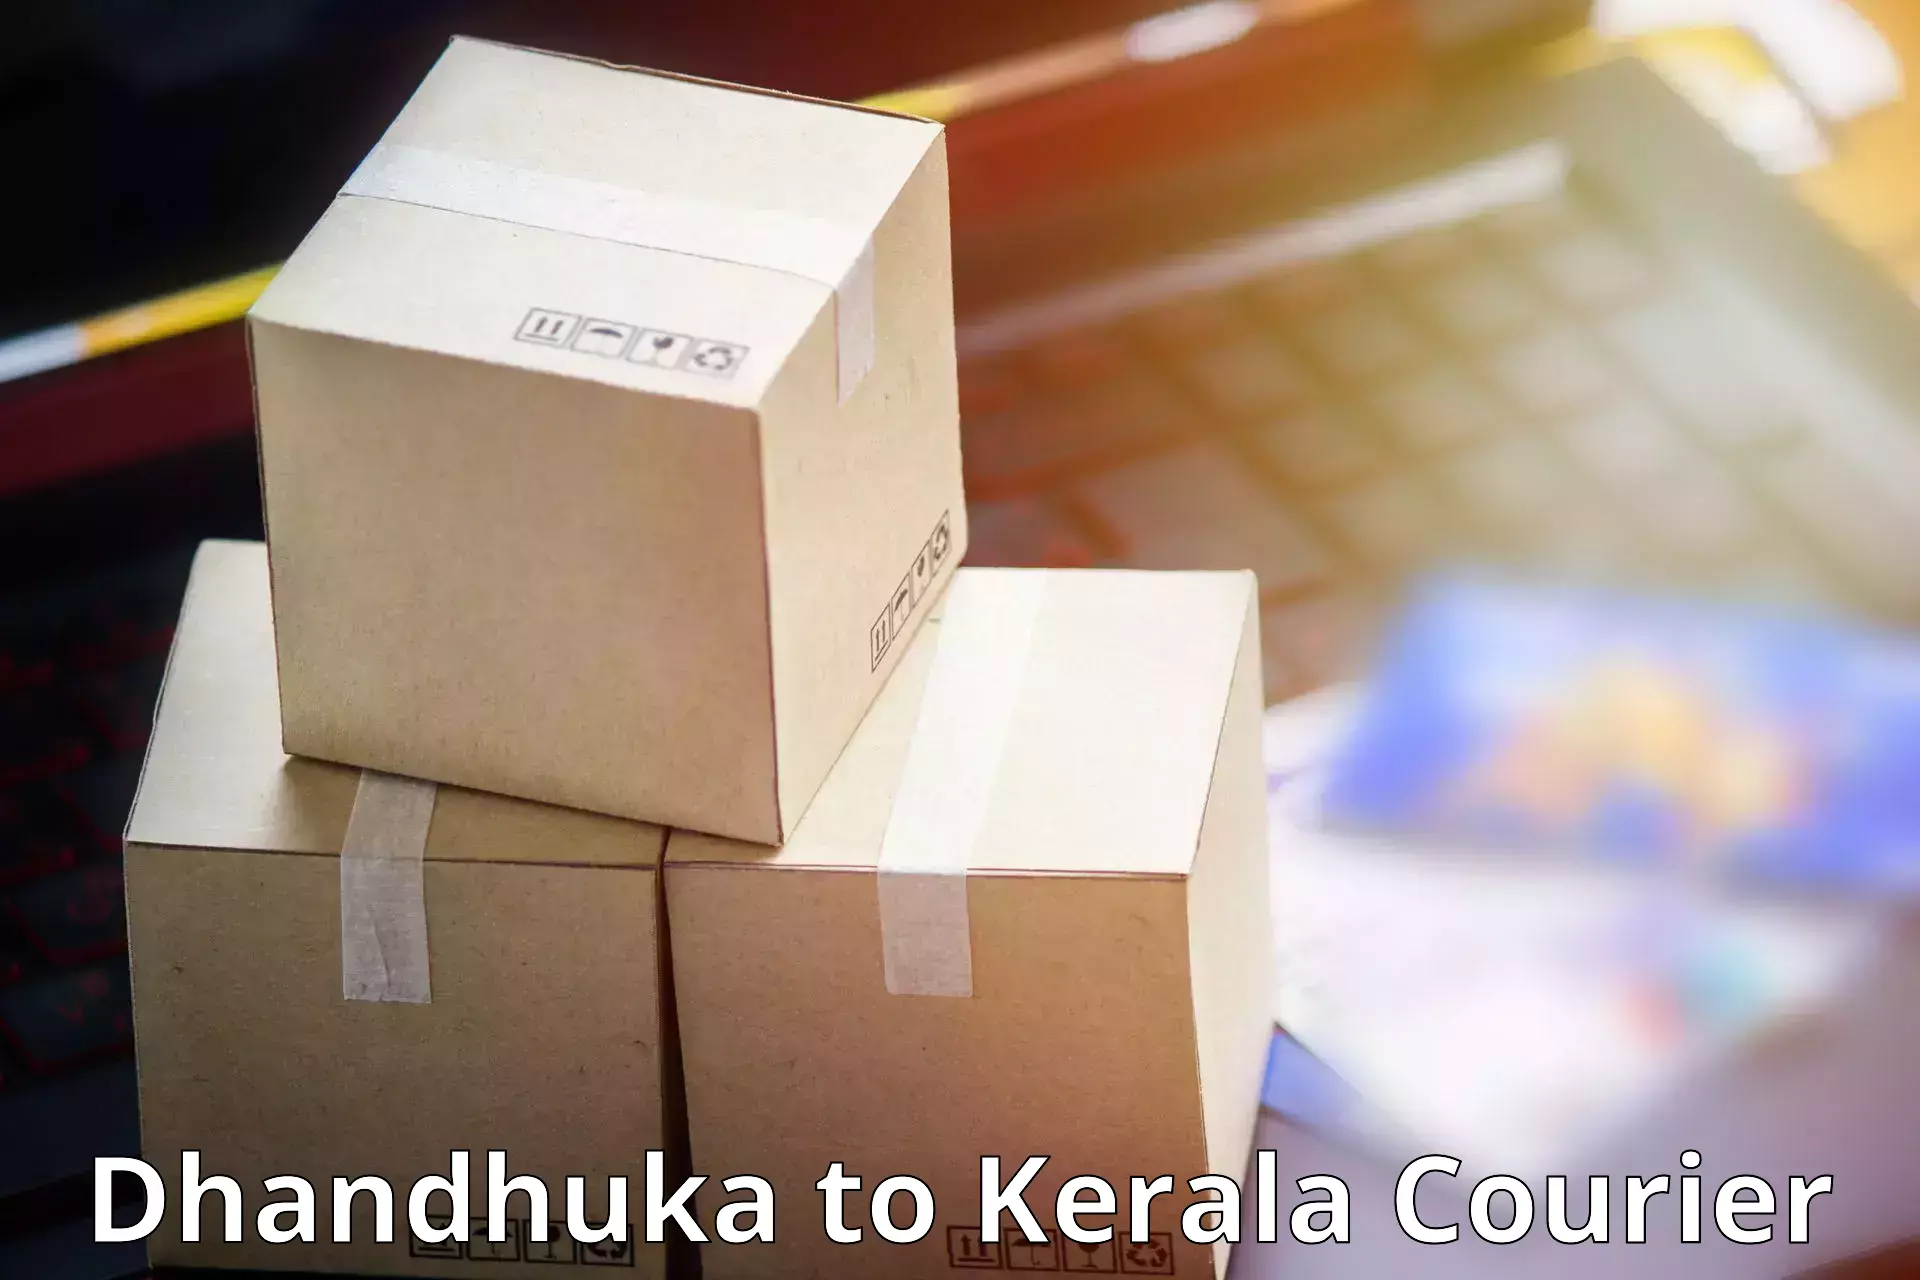 Express courier capabilities Dhandhuka to Kochi